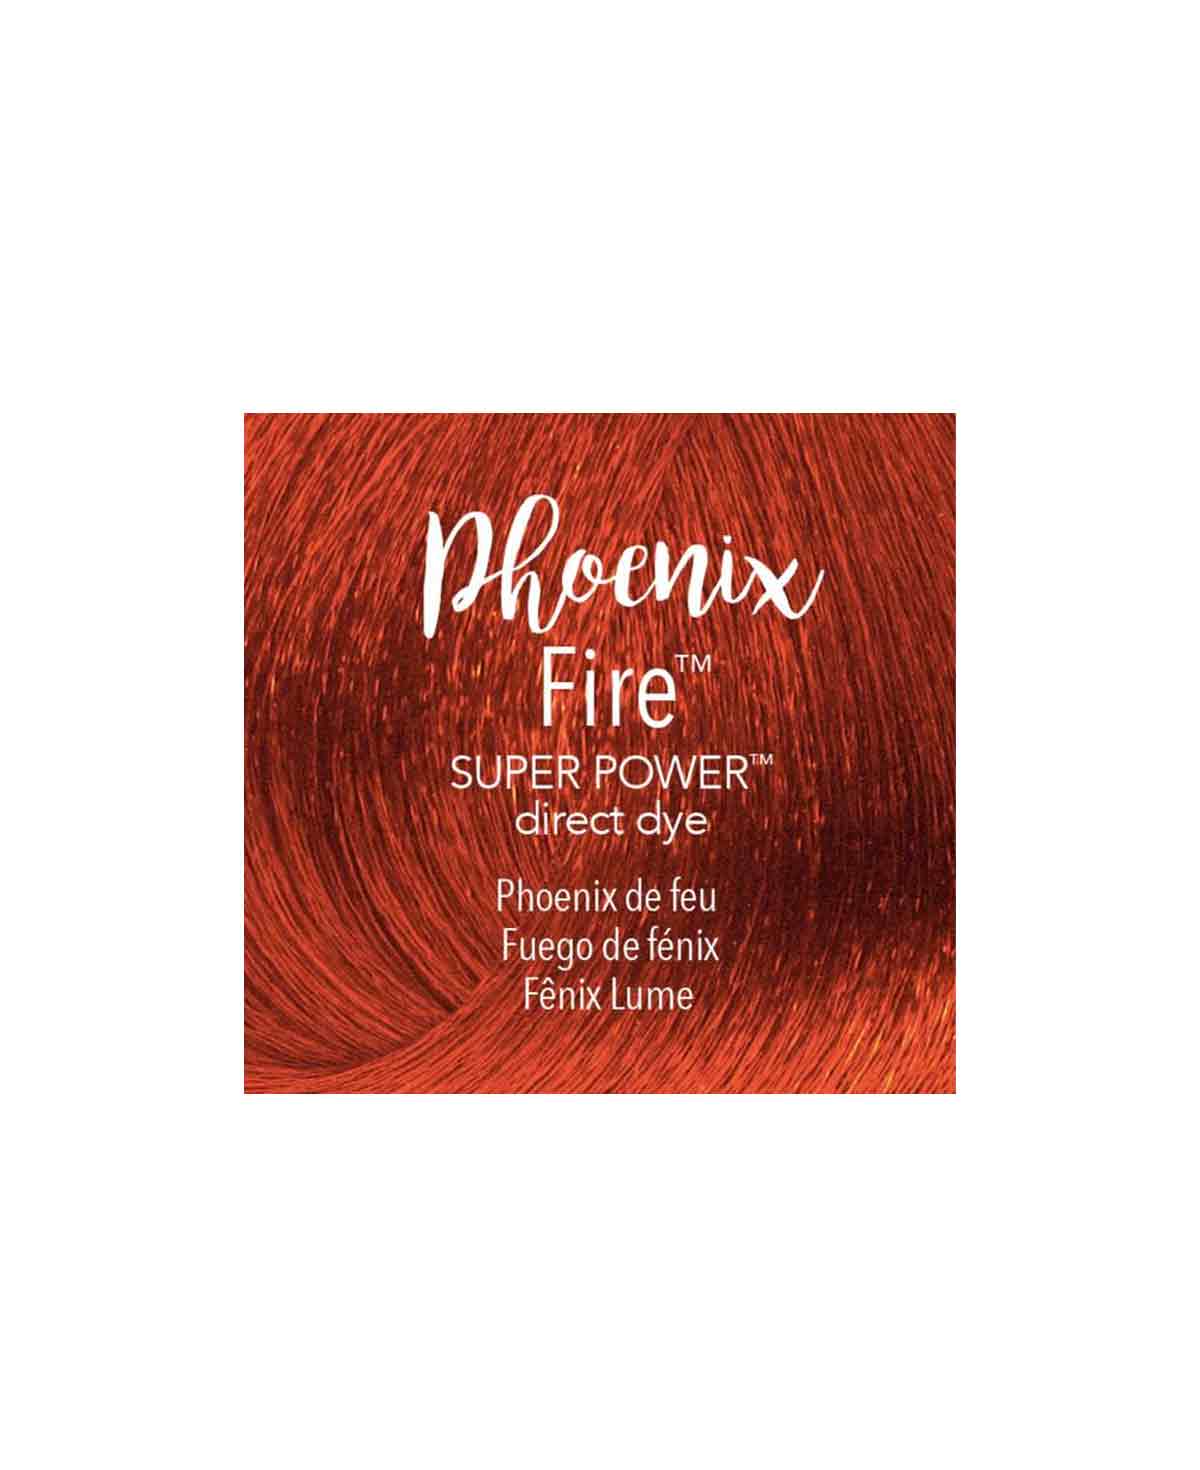 Mydentity - SPDD Phoenix Fire 